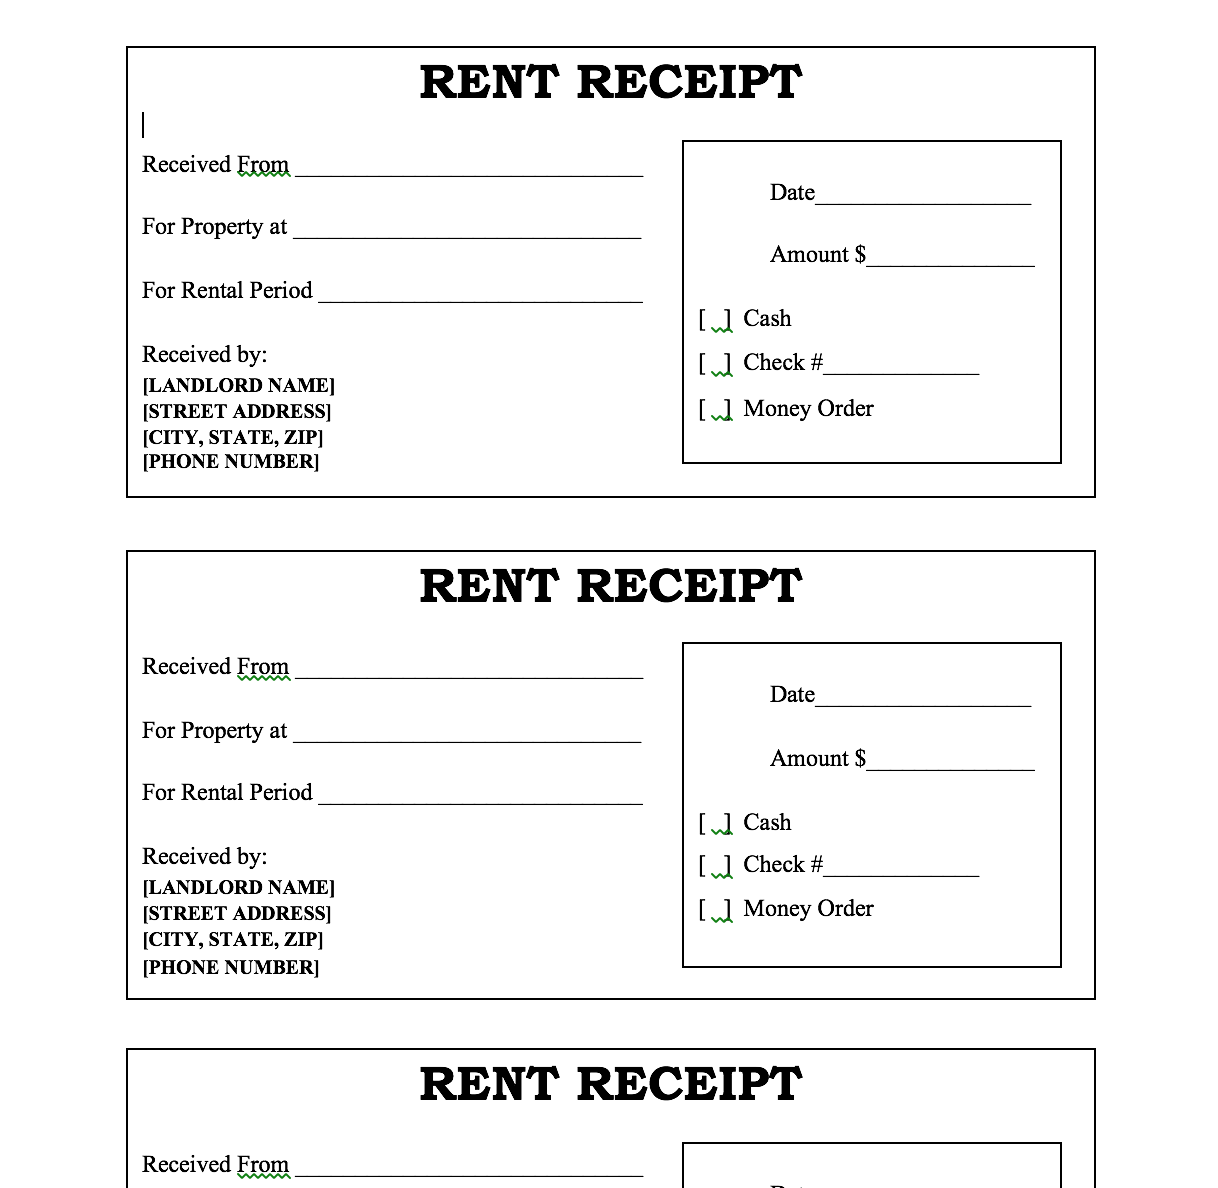 customizable-rent-receipt-microsoft-word